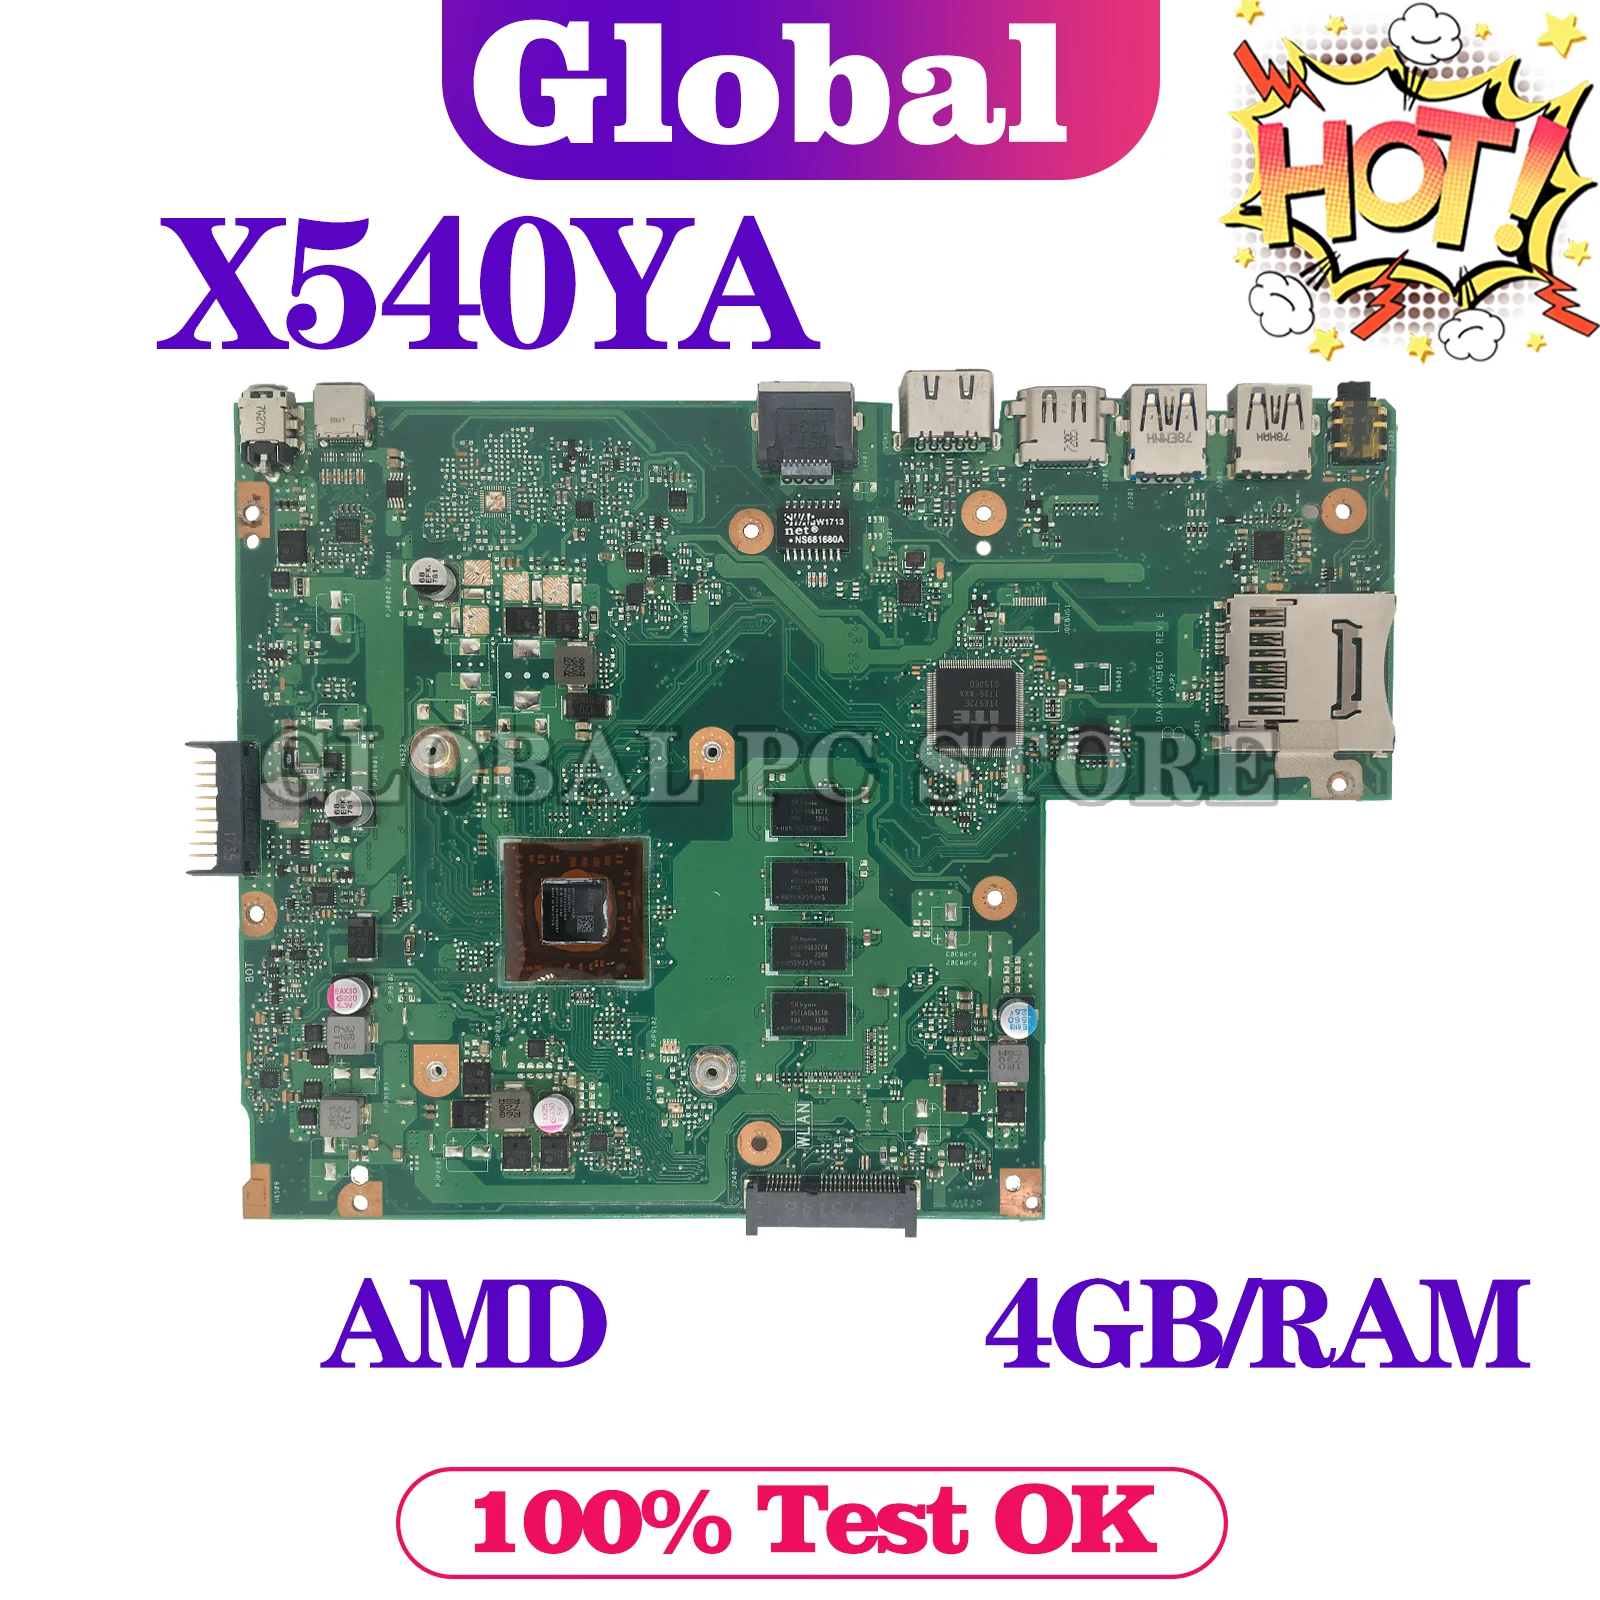 

KEFU X540YA Mainboard For ASUS Vivobook X540Y R540YA F540YA A540YA D540YA Laptop Motherboard AMD CPU 2GB/4GB/RAM MAIN BOARD